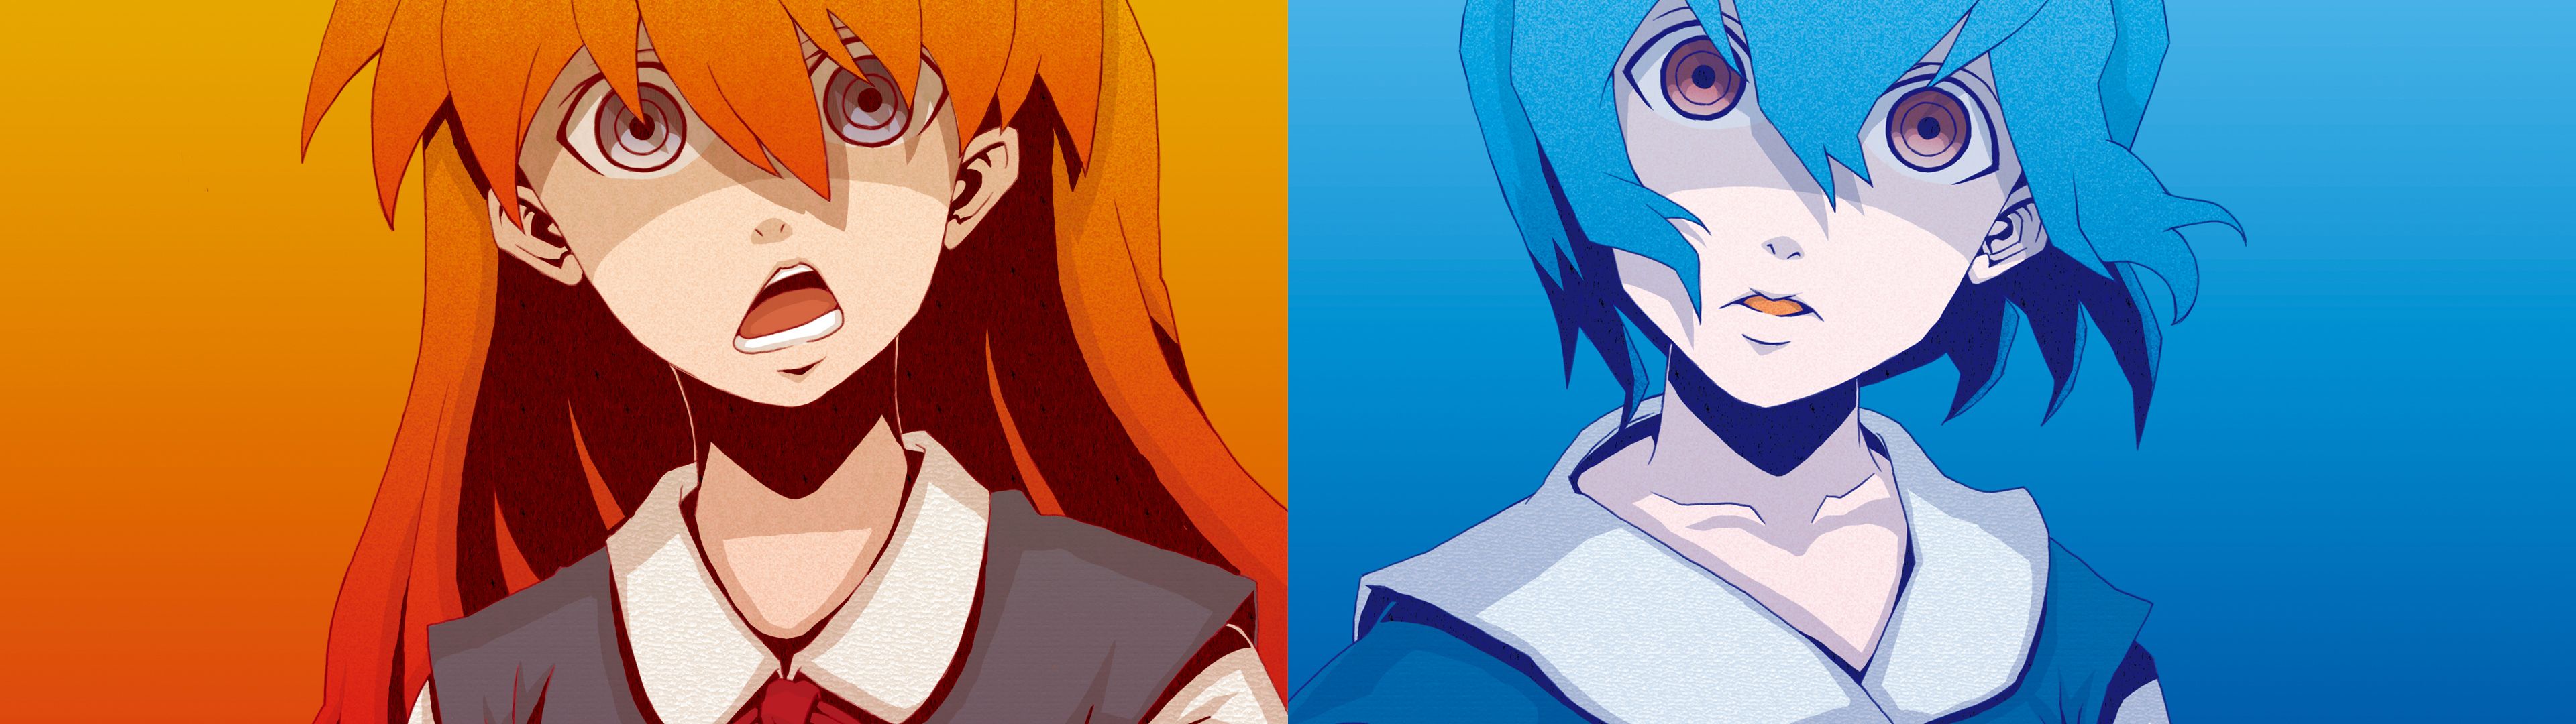 Anime Girl Dual Screen Wallpaper HD Wallpaper